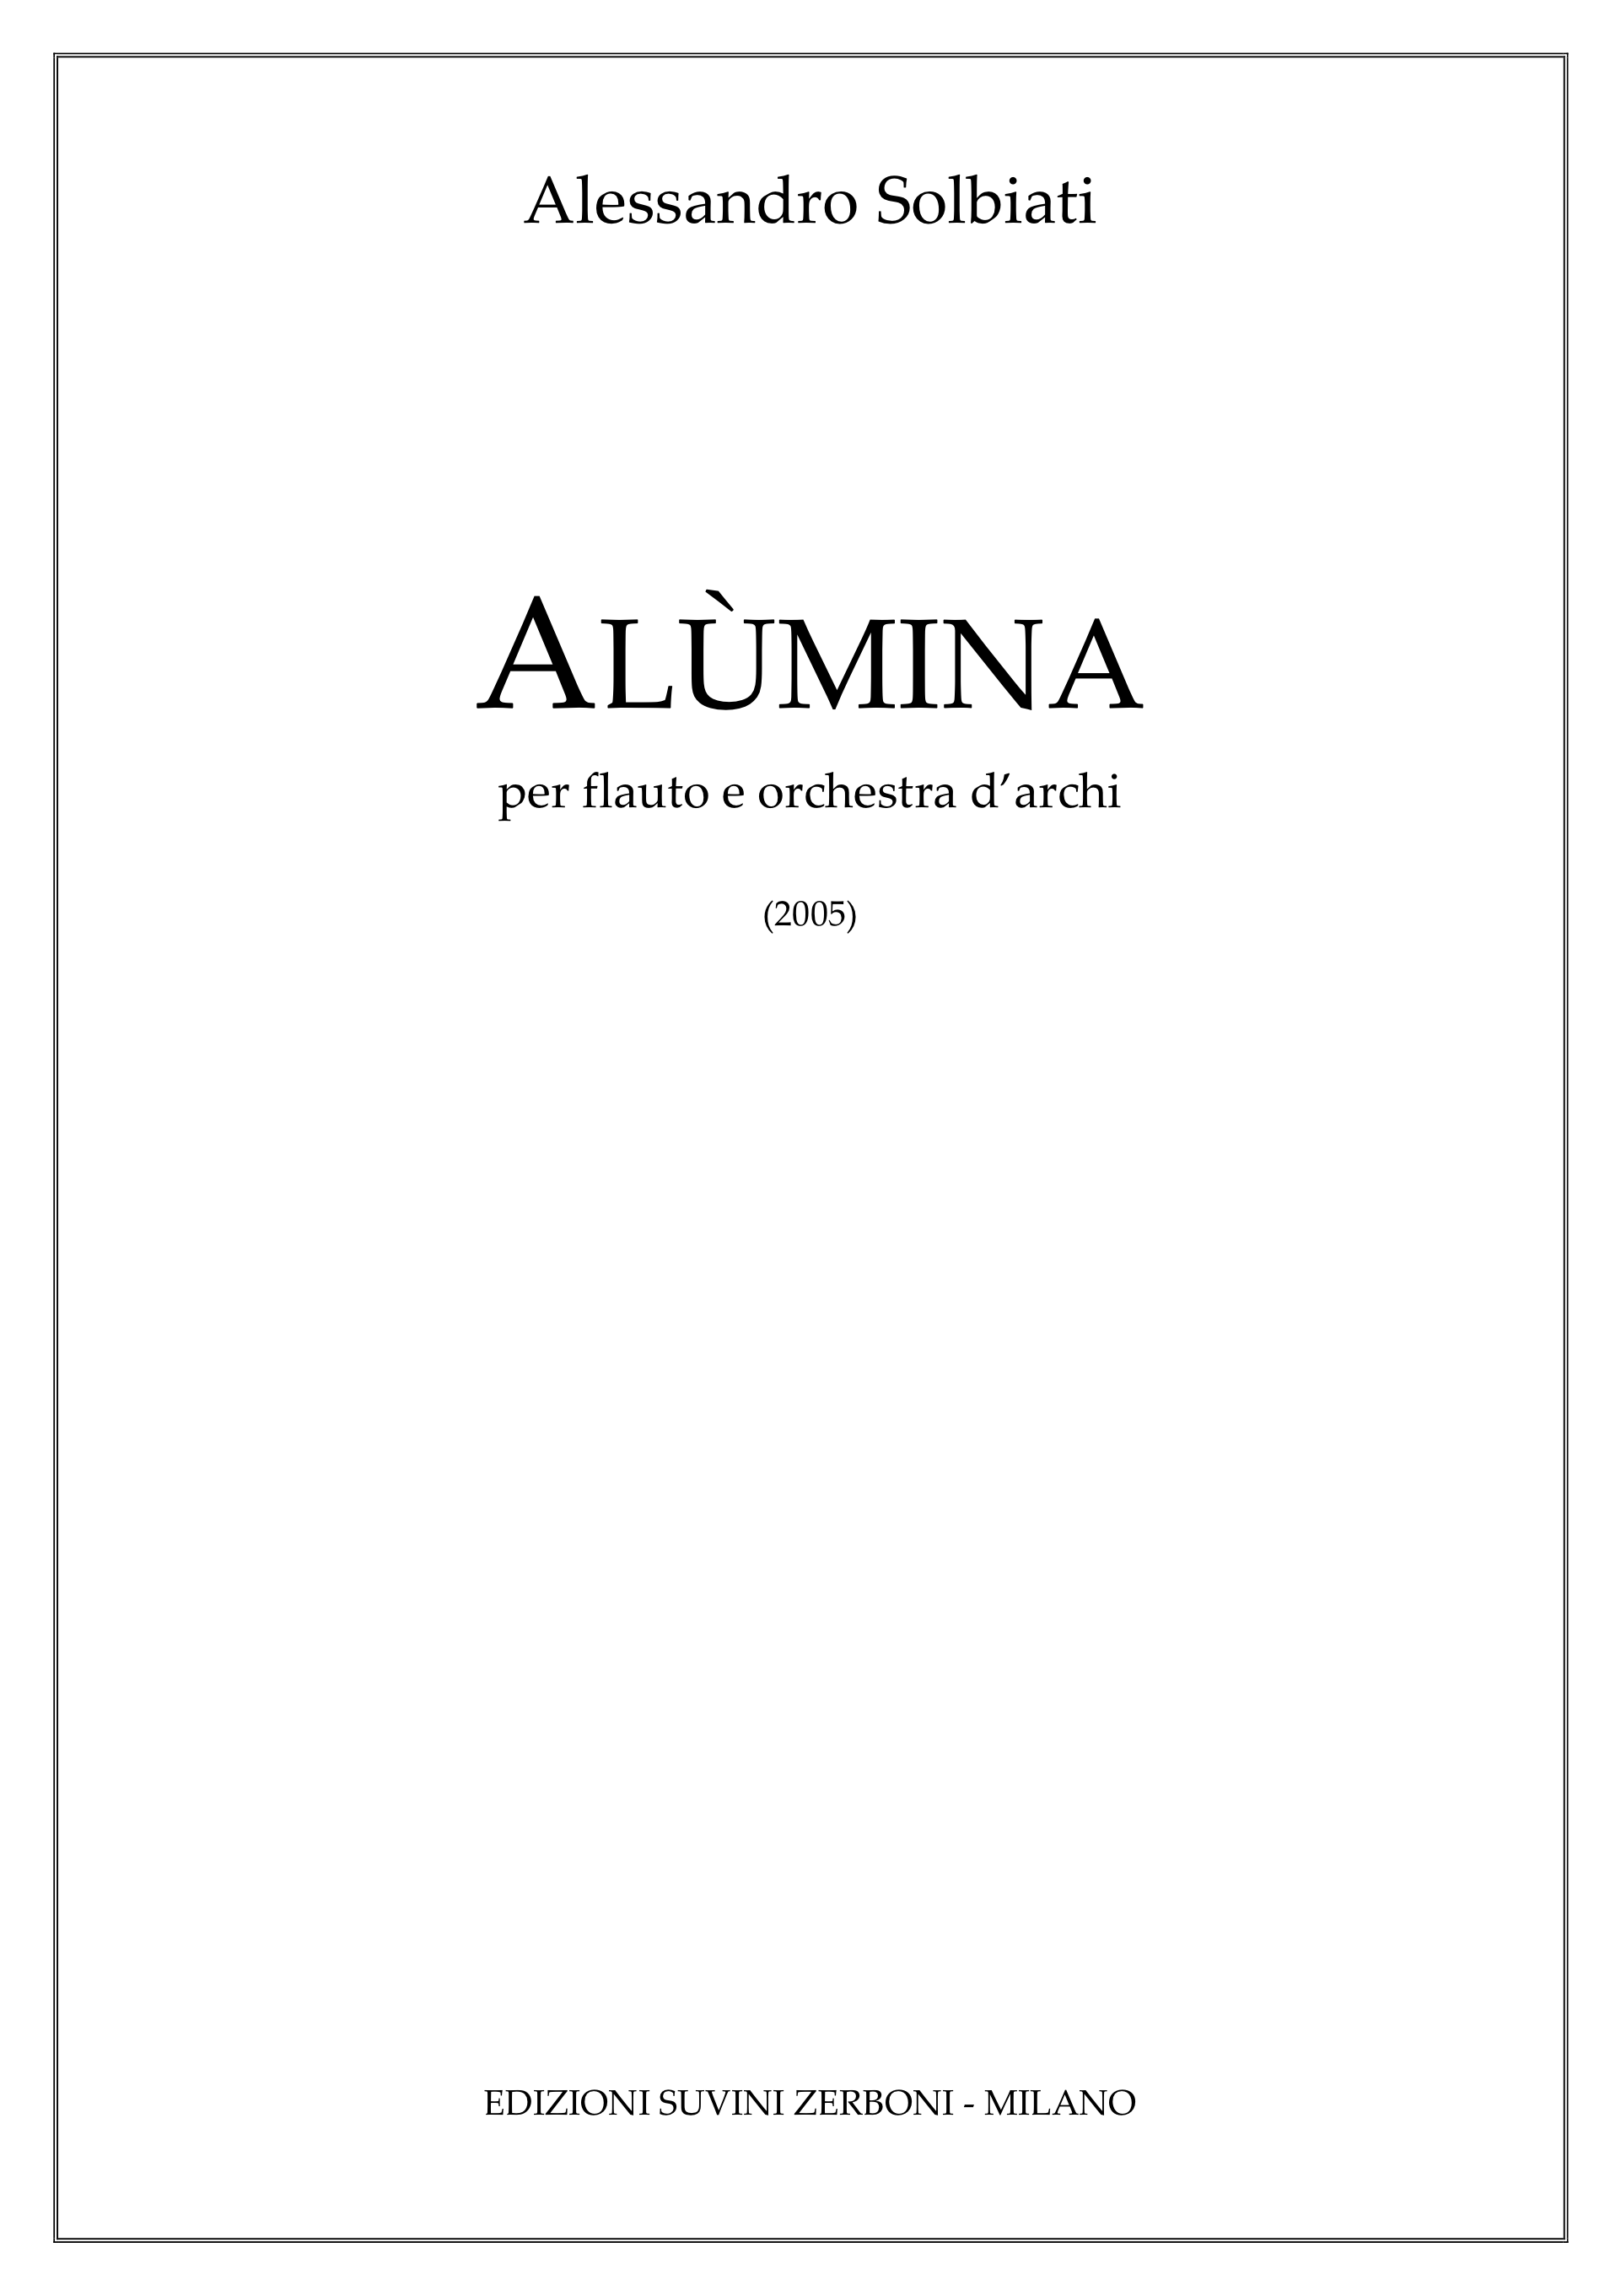 Alumina_Solbiati 33 50